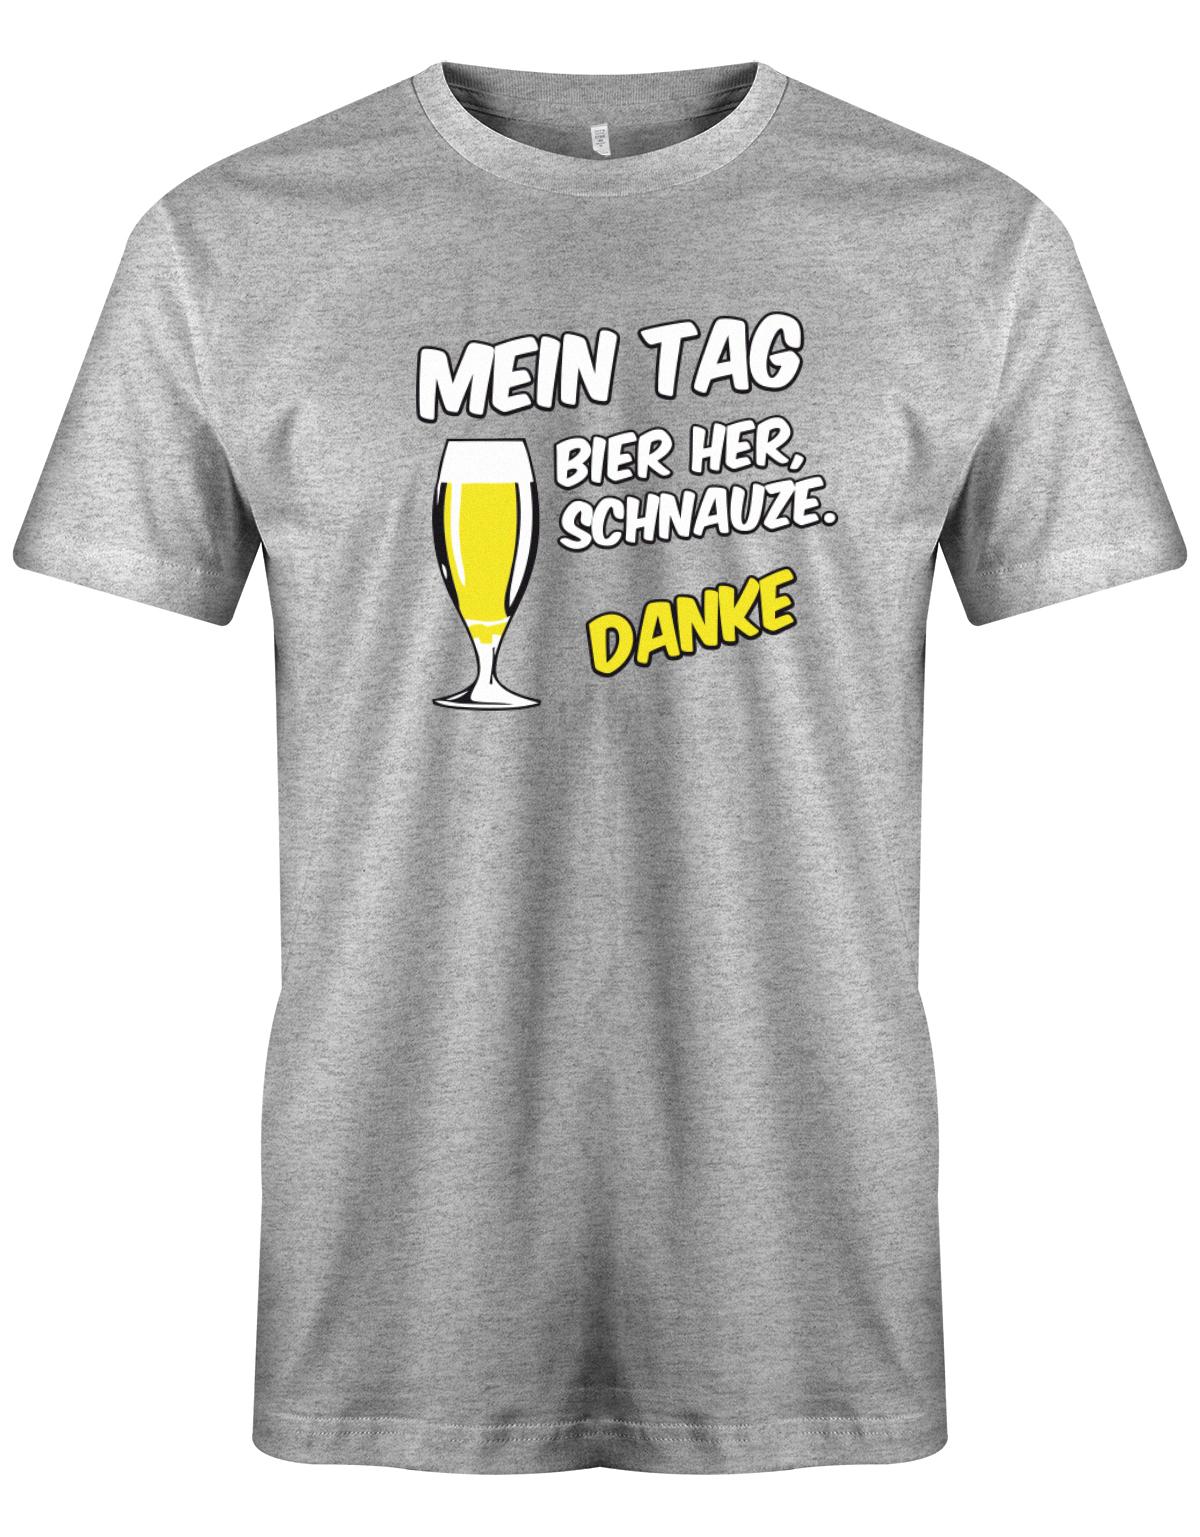 Mein-Tag-Bier-Her-Schnauze-Danke-Vatertag-Herren-Shirt-Grau